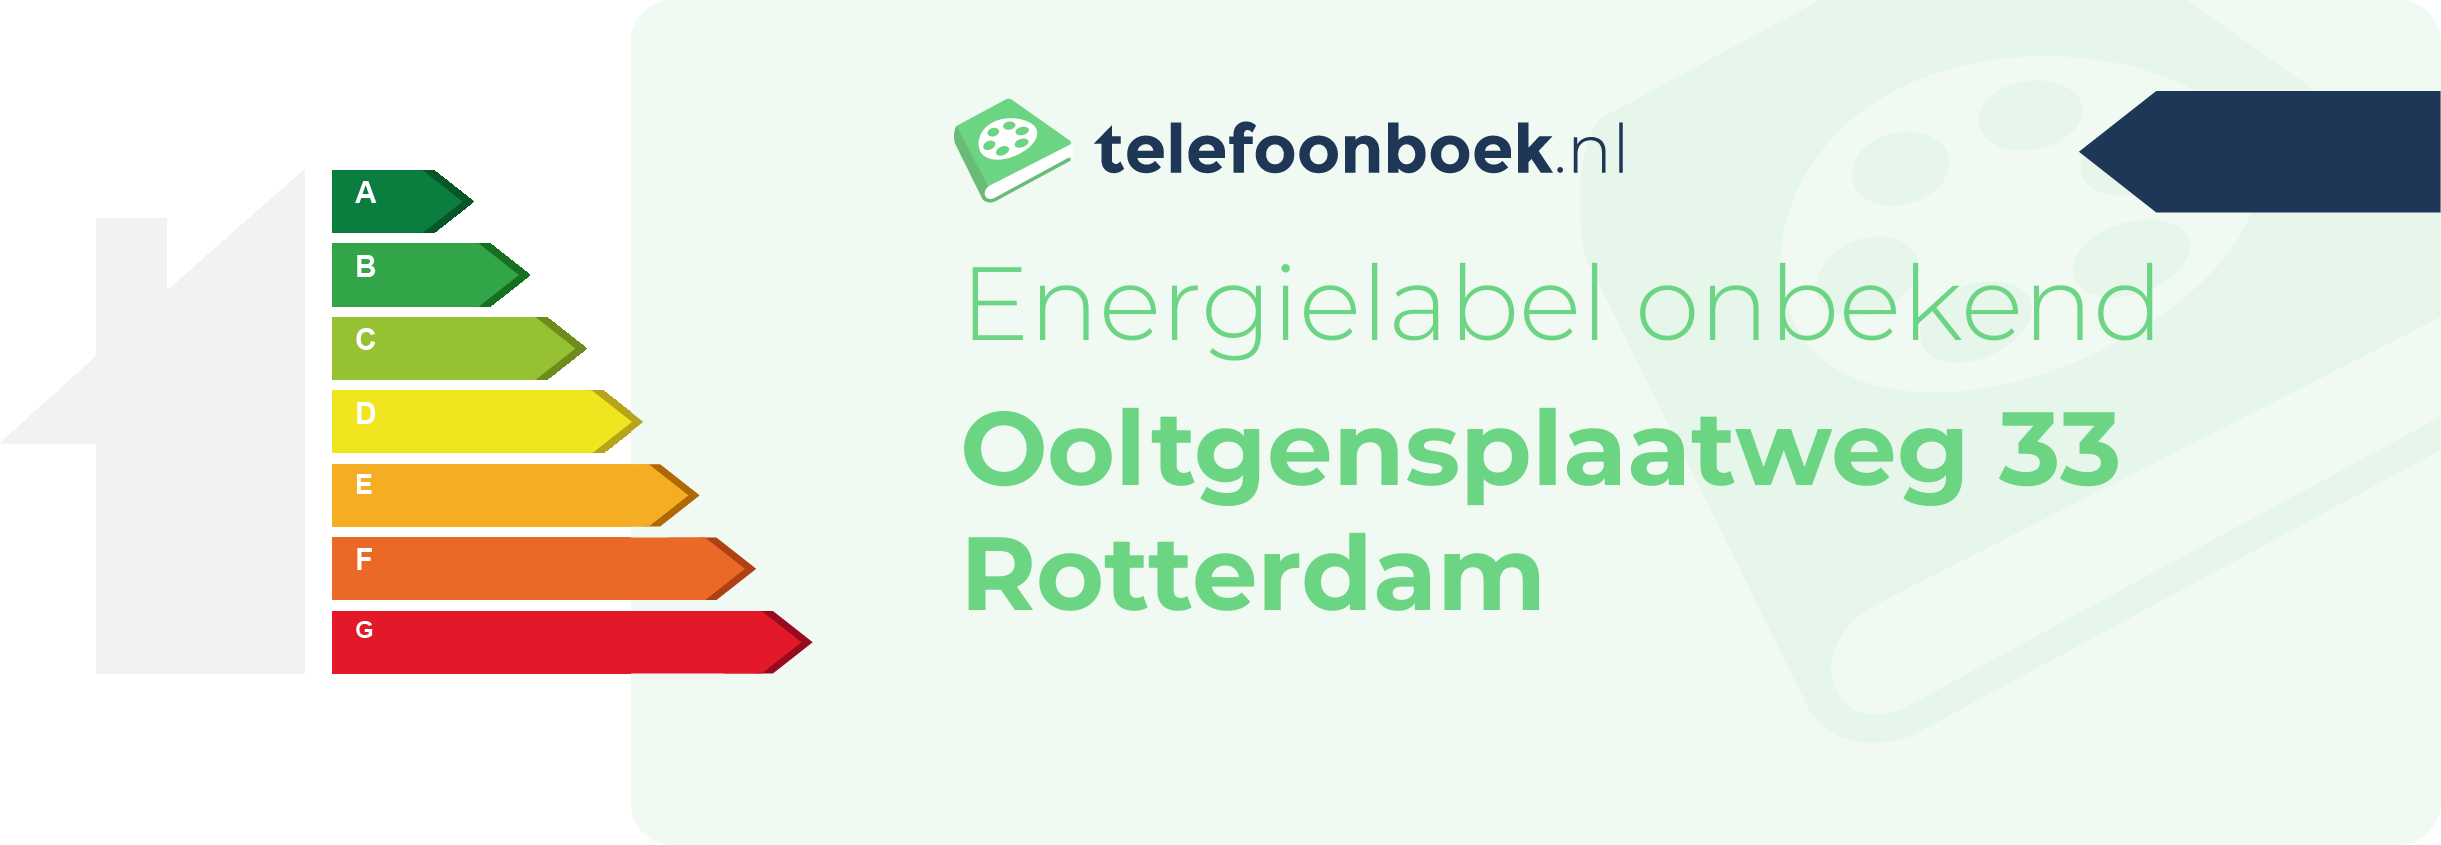 Energielabel Ooltgensplaatweg 33 Rotterdam